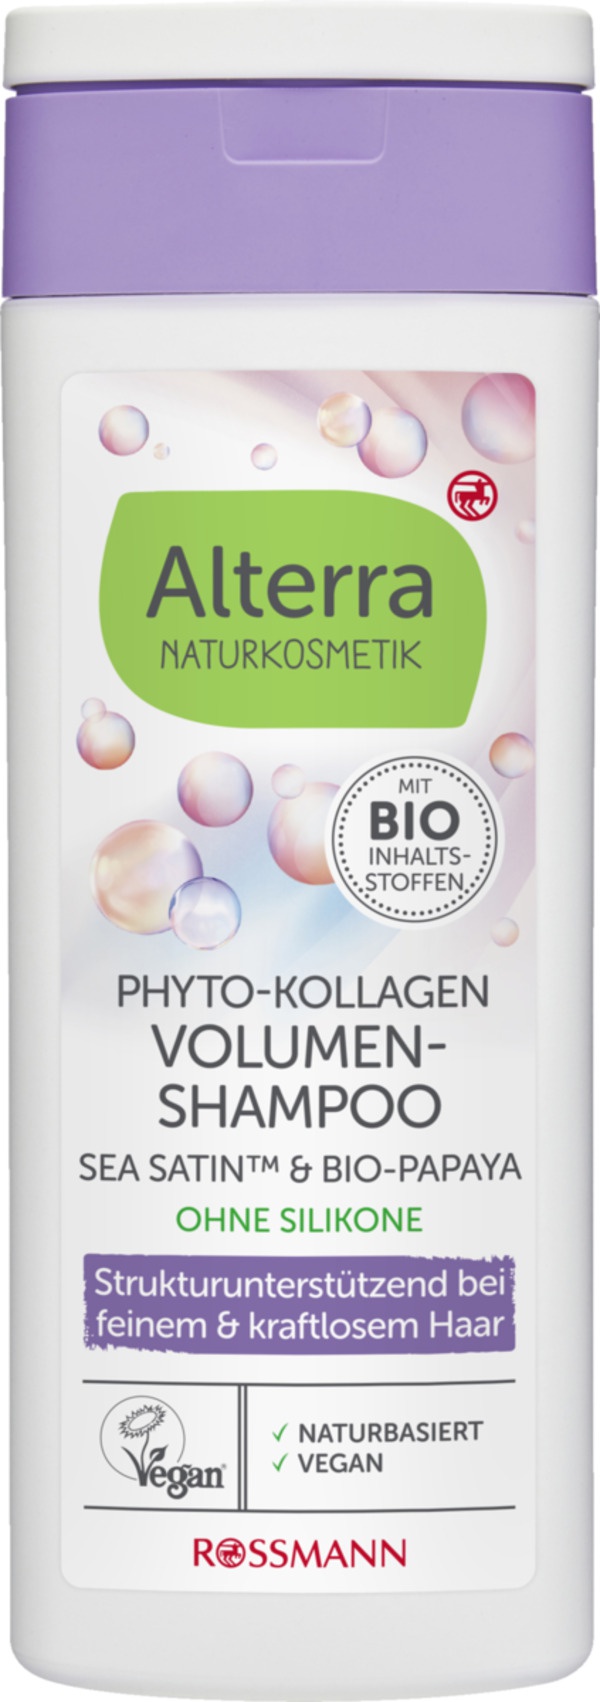 Alterra Phyto-Kollagen Volumen Shampoo